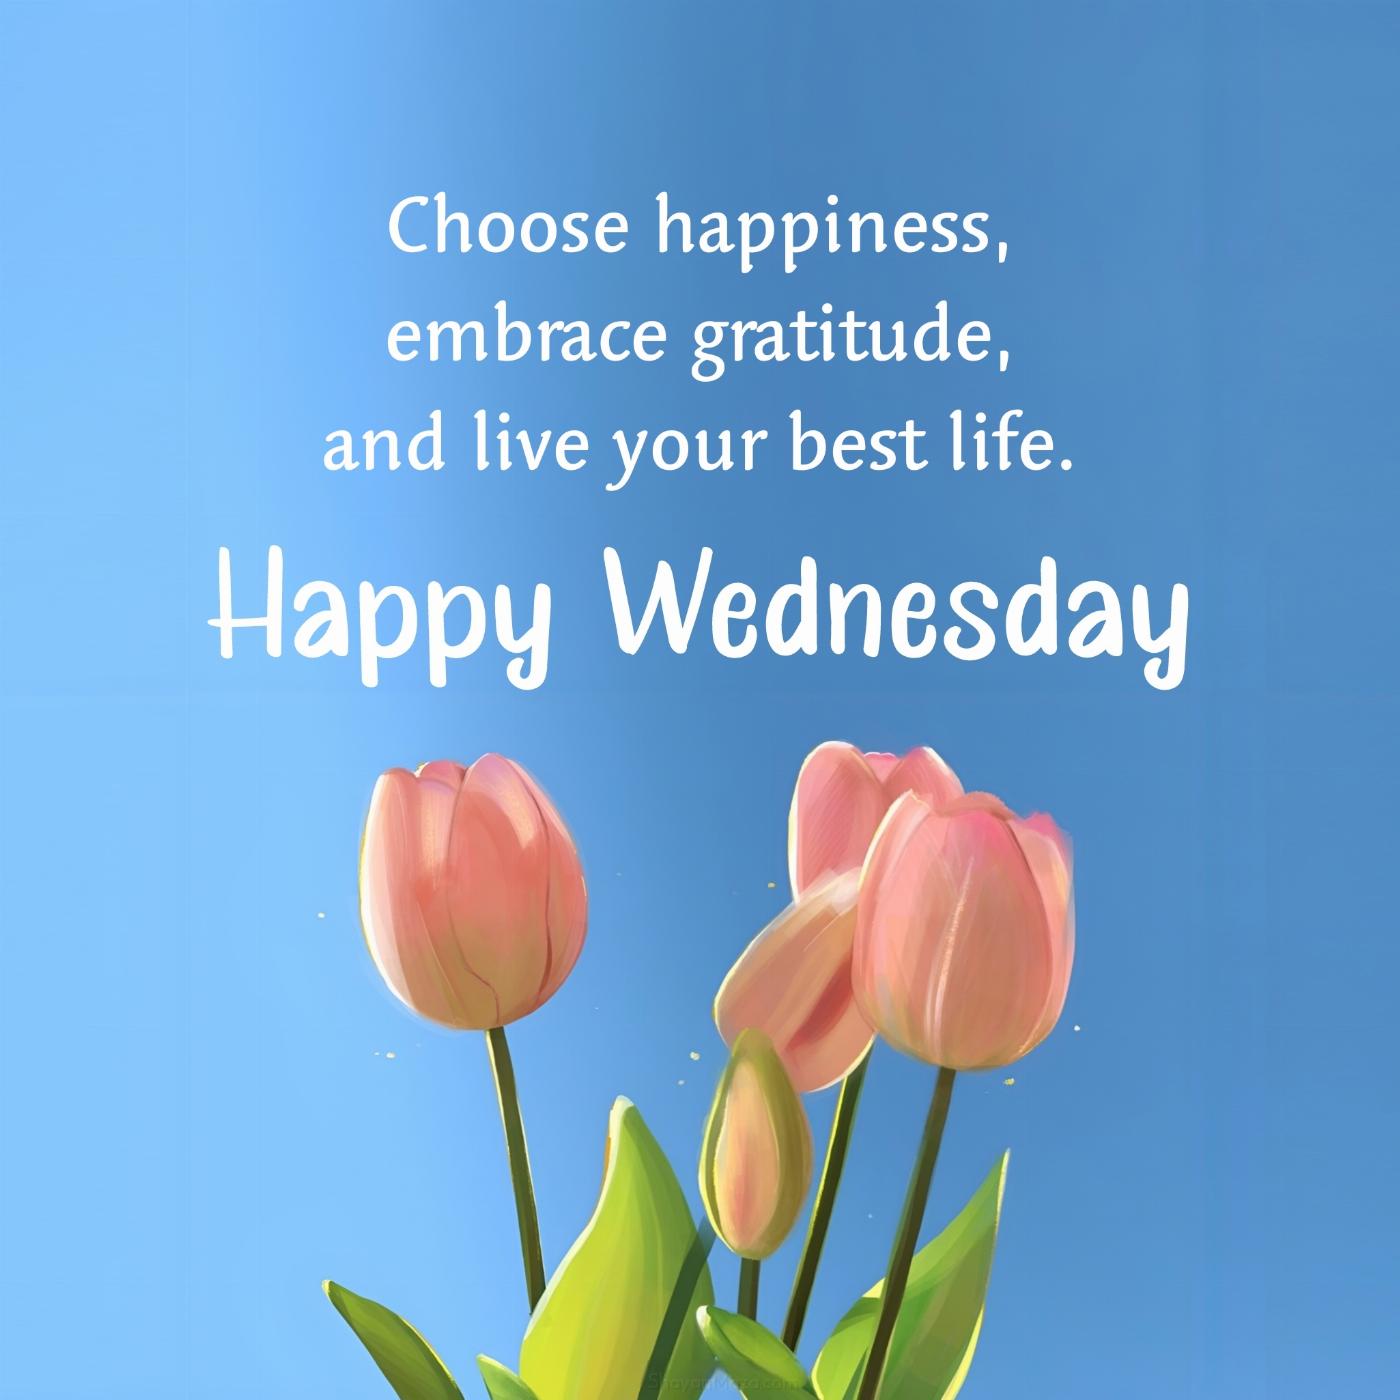 Happy Wednesday! Choose happiness embrace gratitude